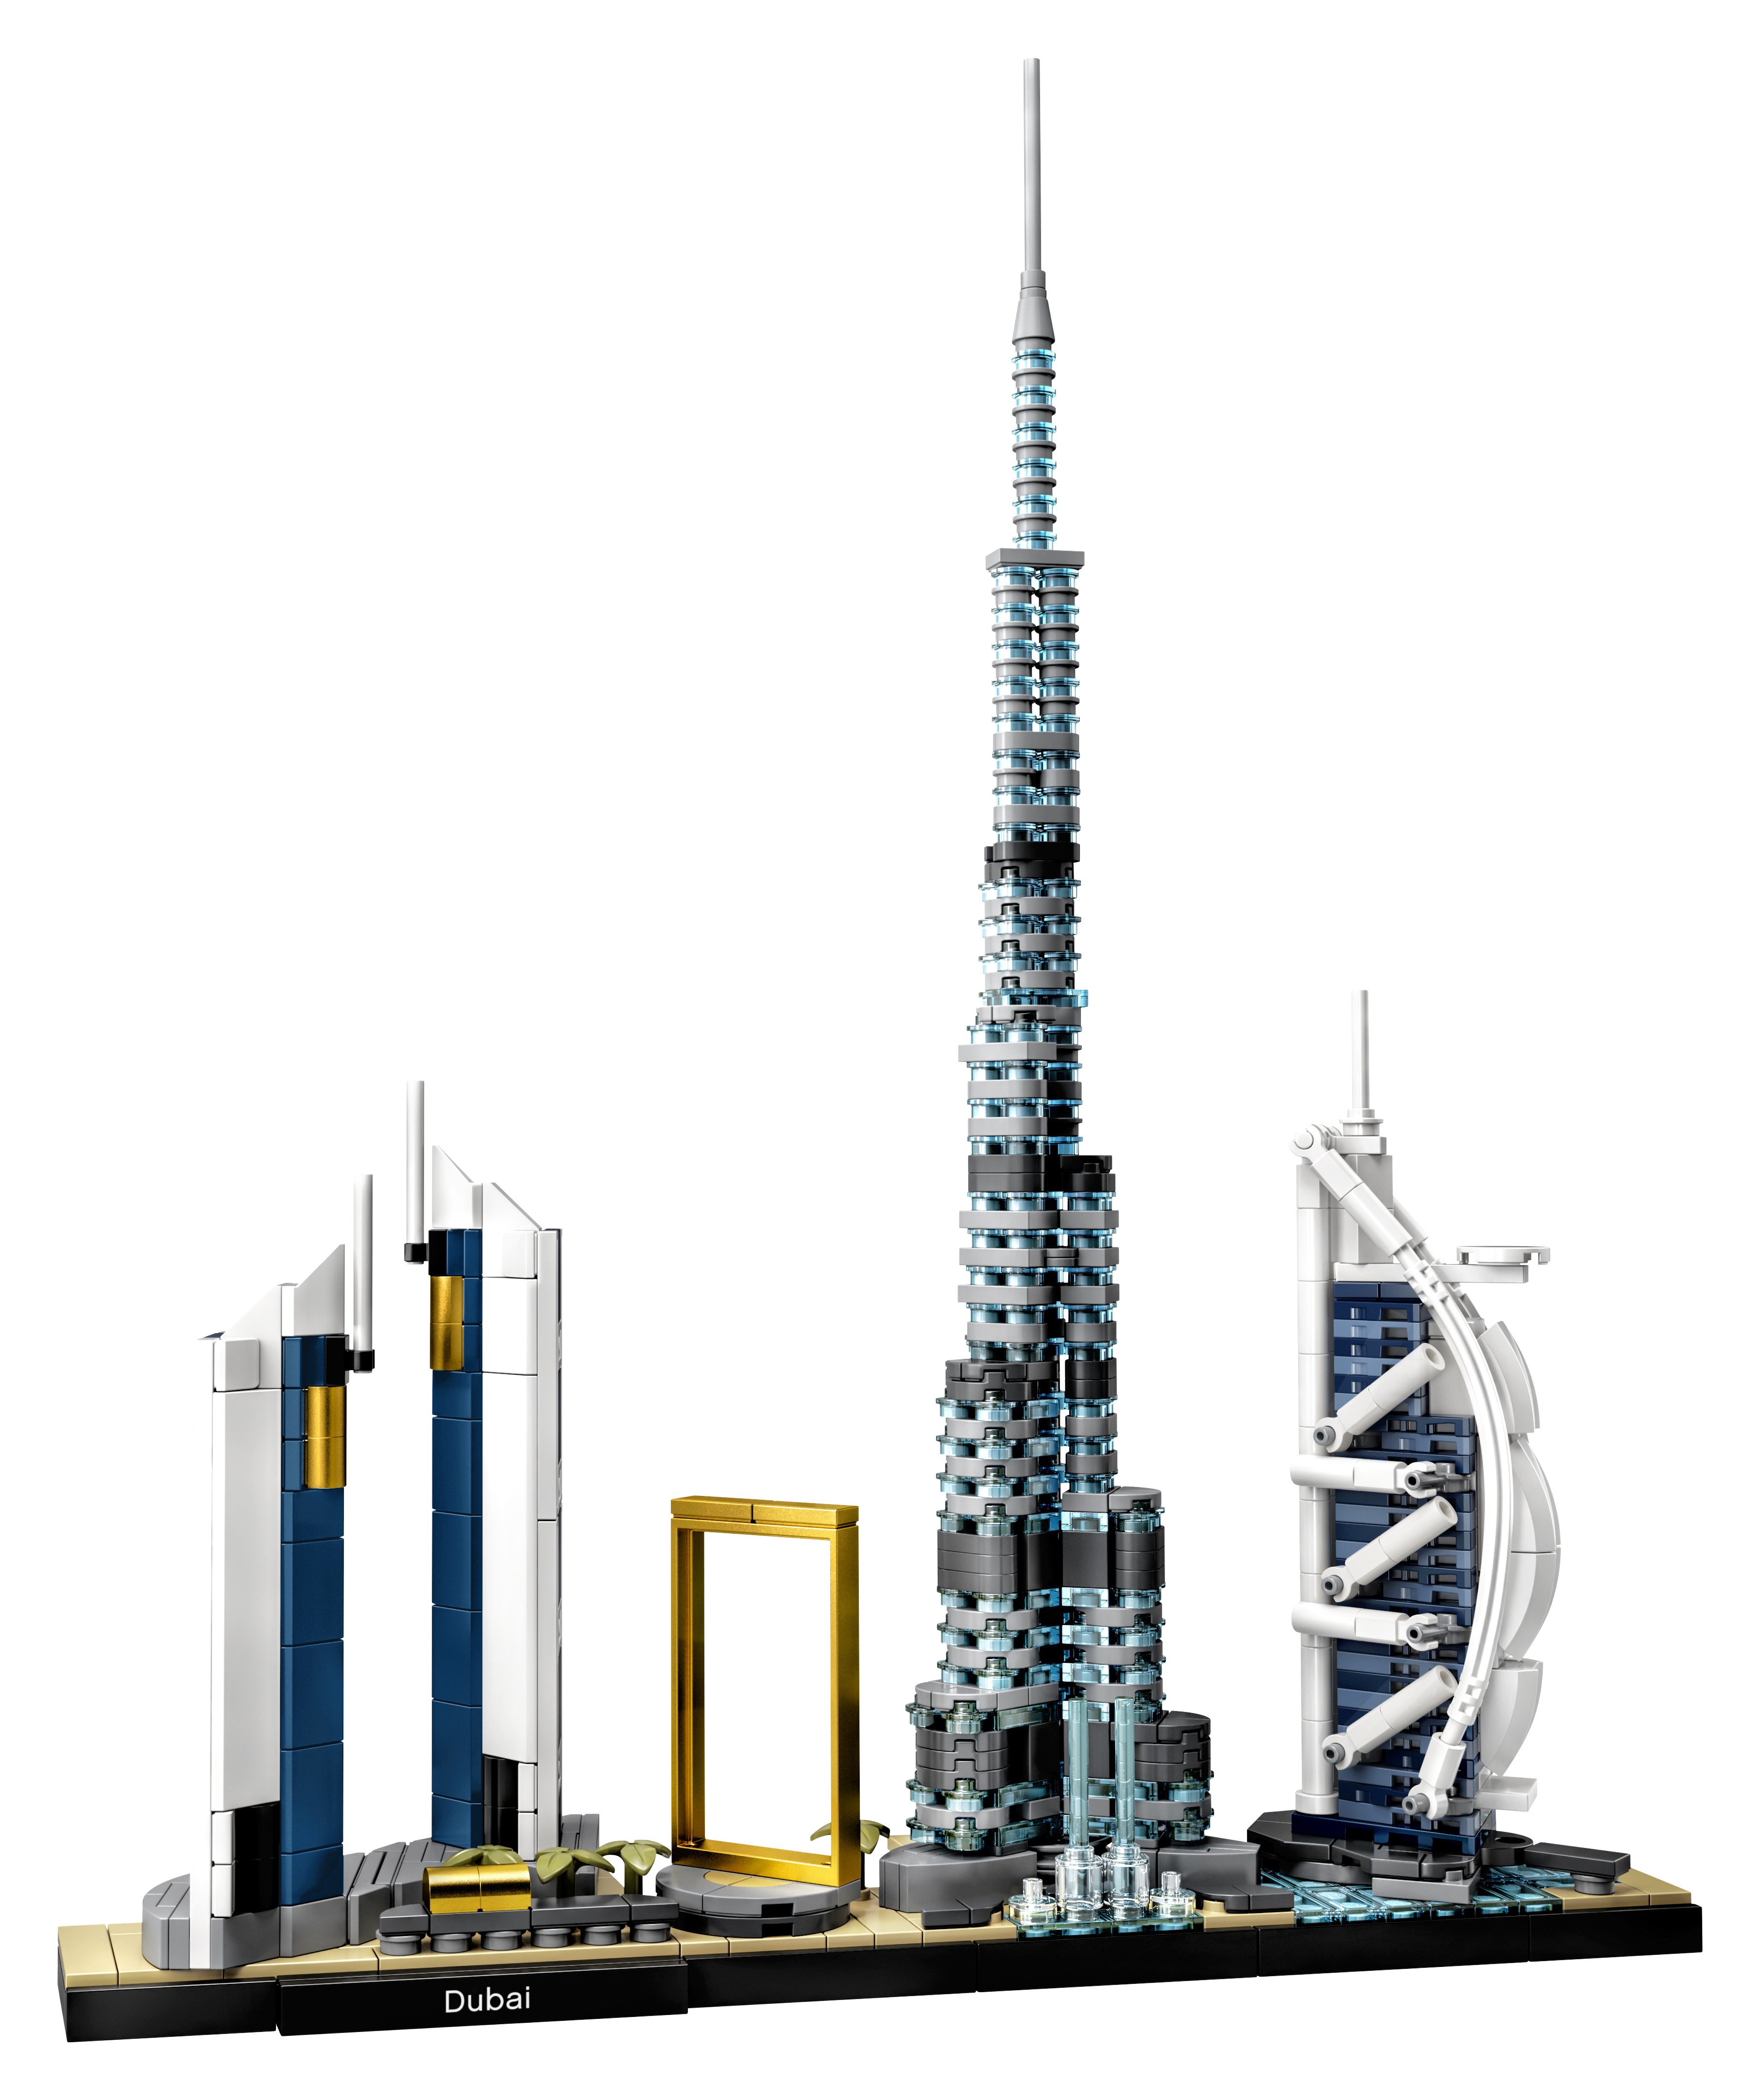 LEGO Architecture Dubai